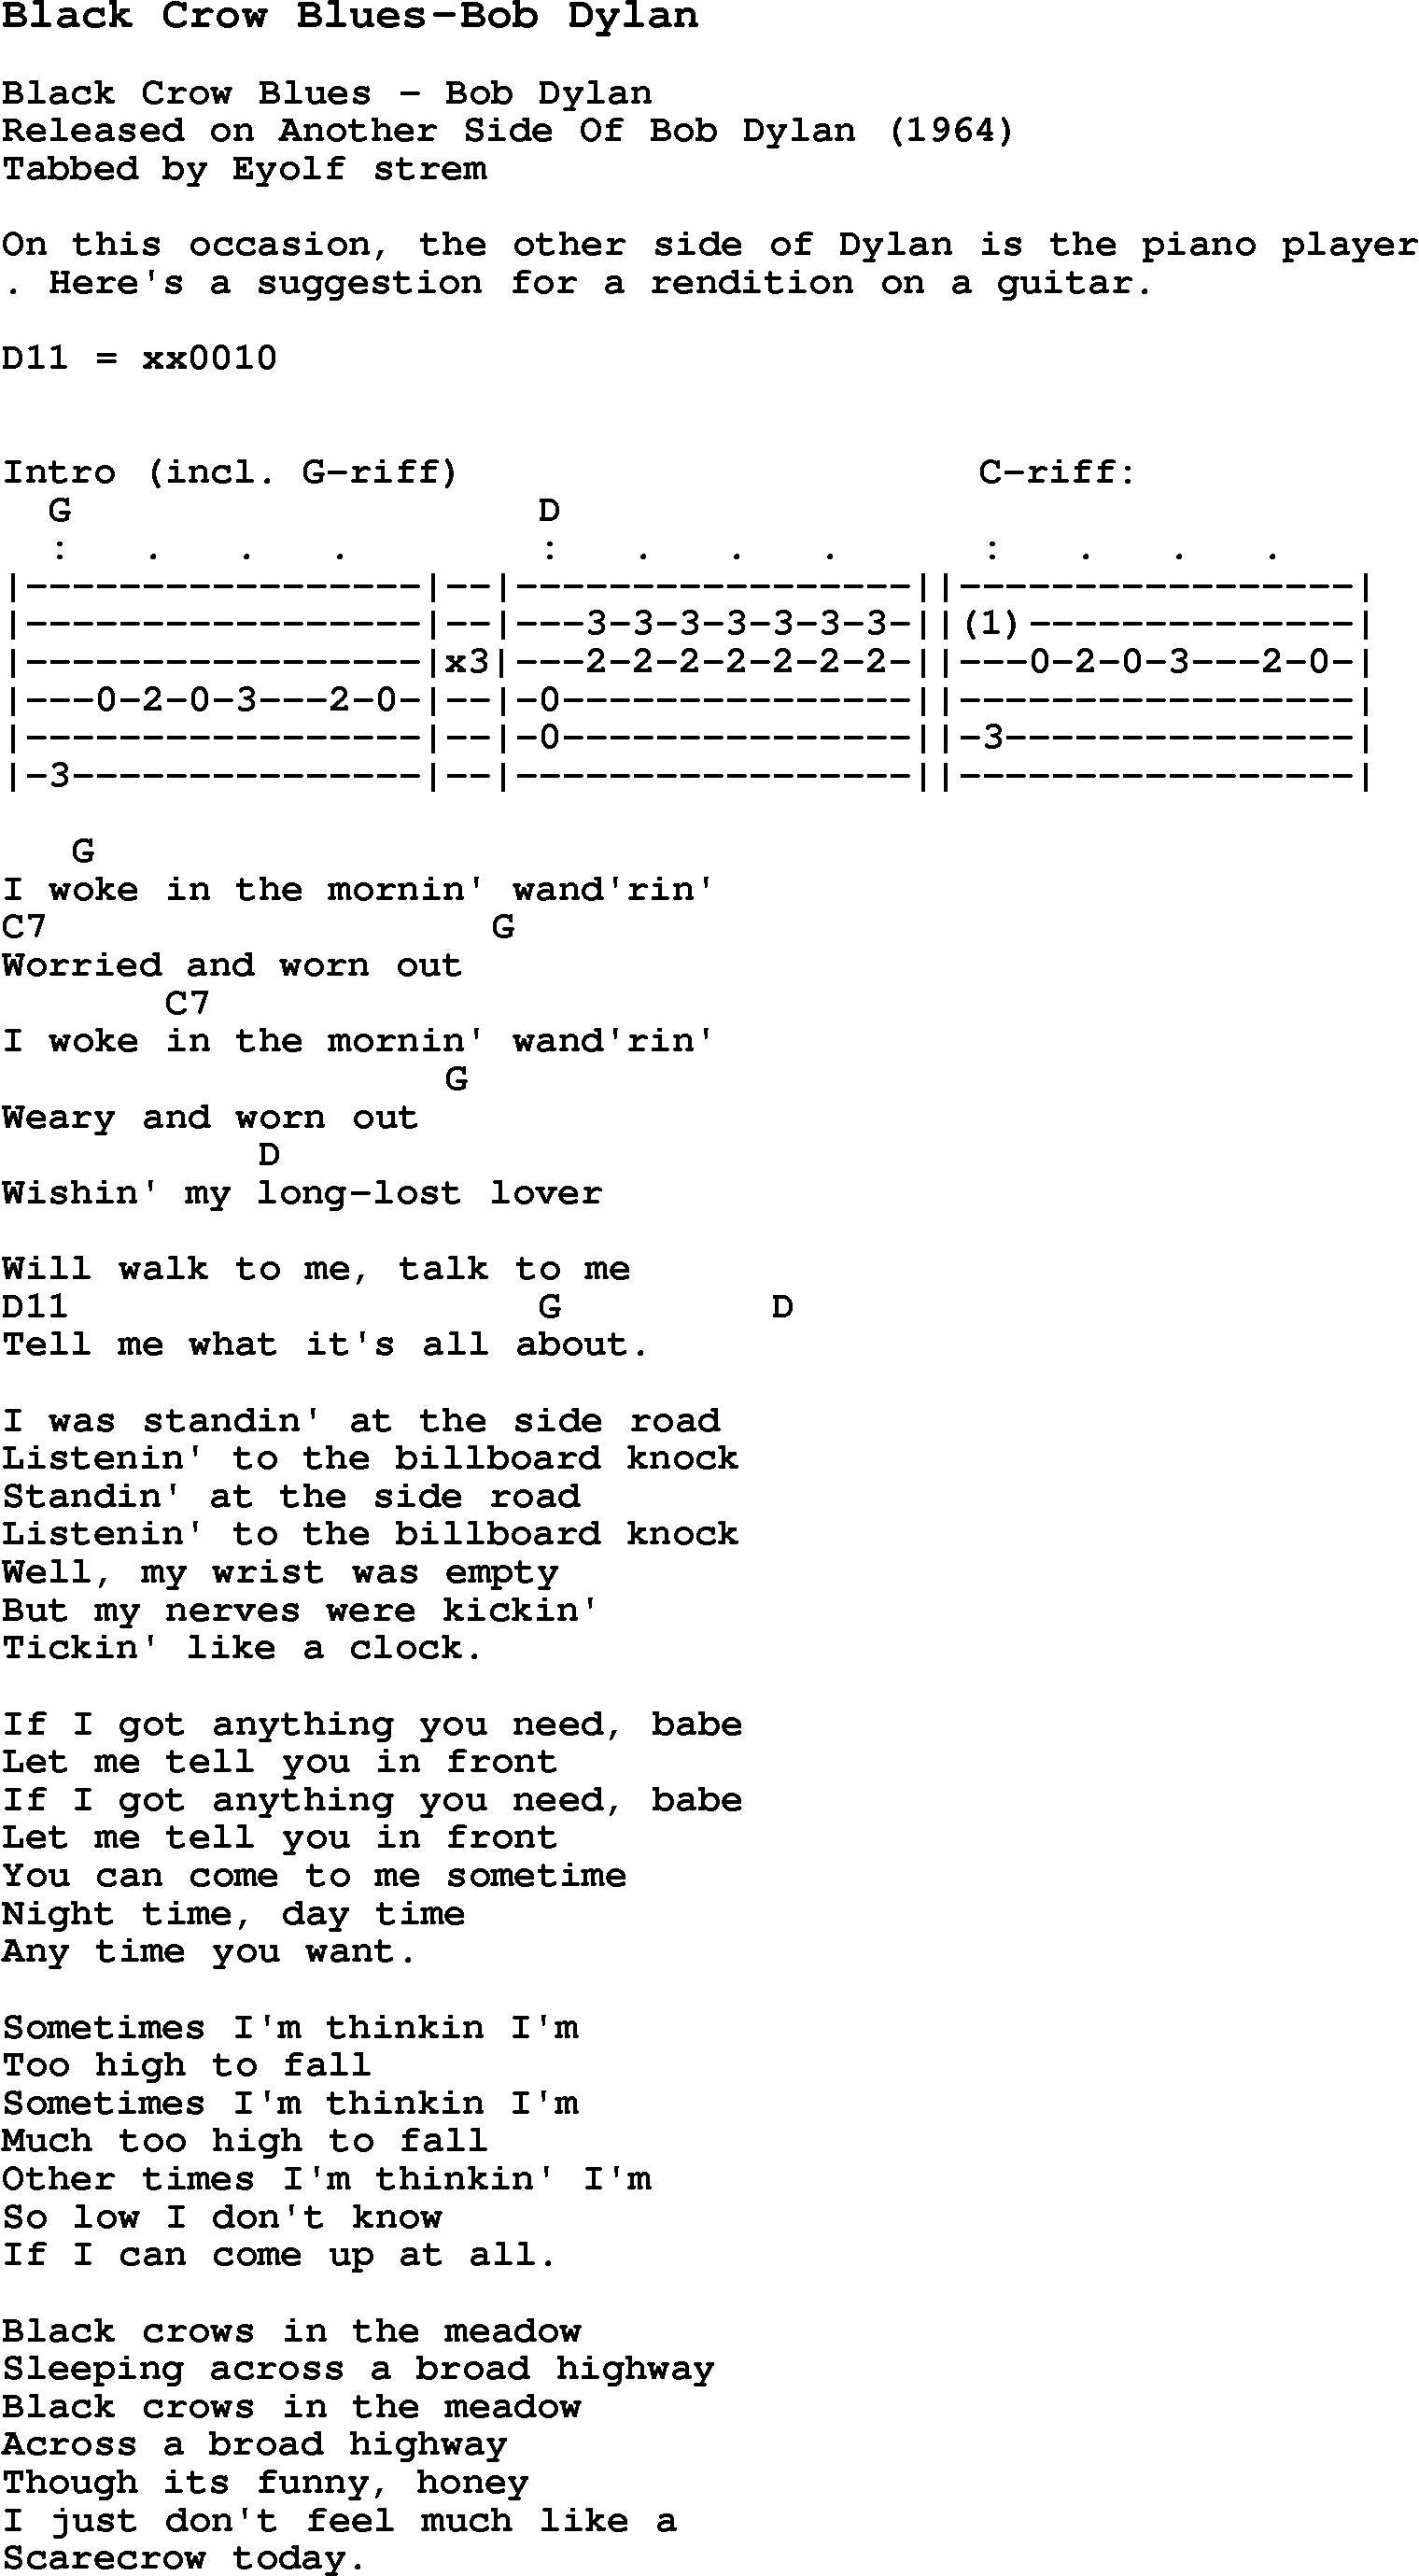 Blues Guitar Song, lyrics, chords, tablature, playing hints for Black Crow Blues-Bob Dylan